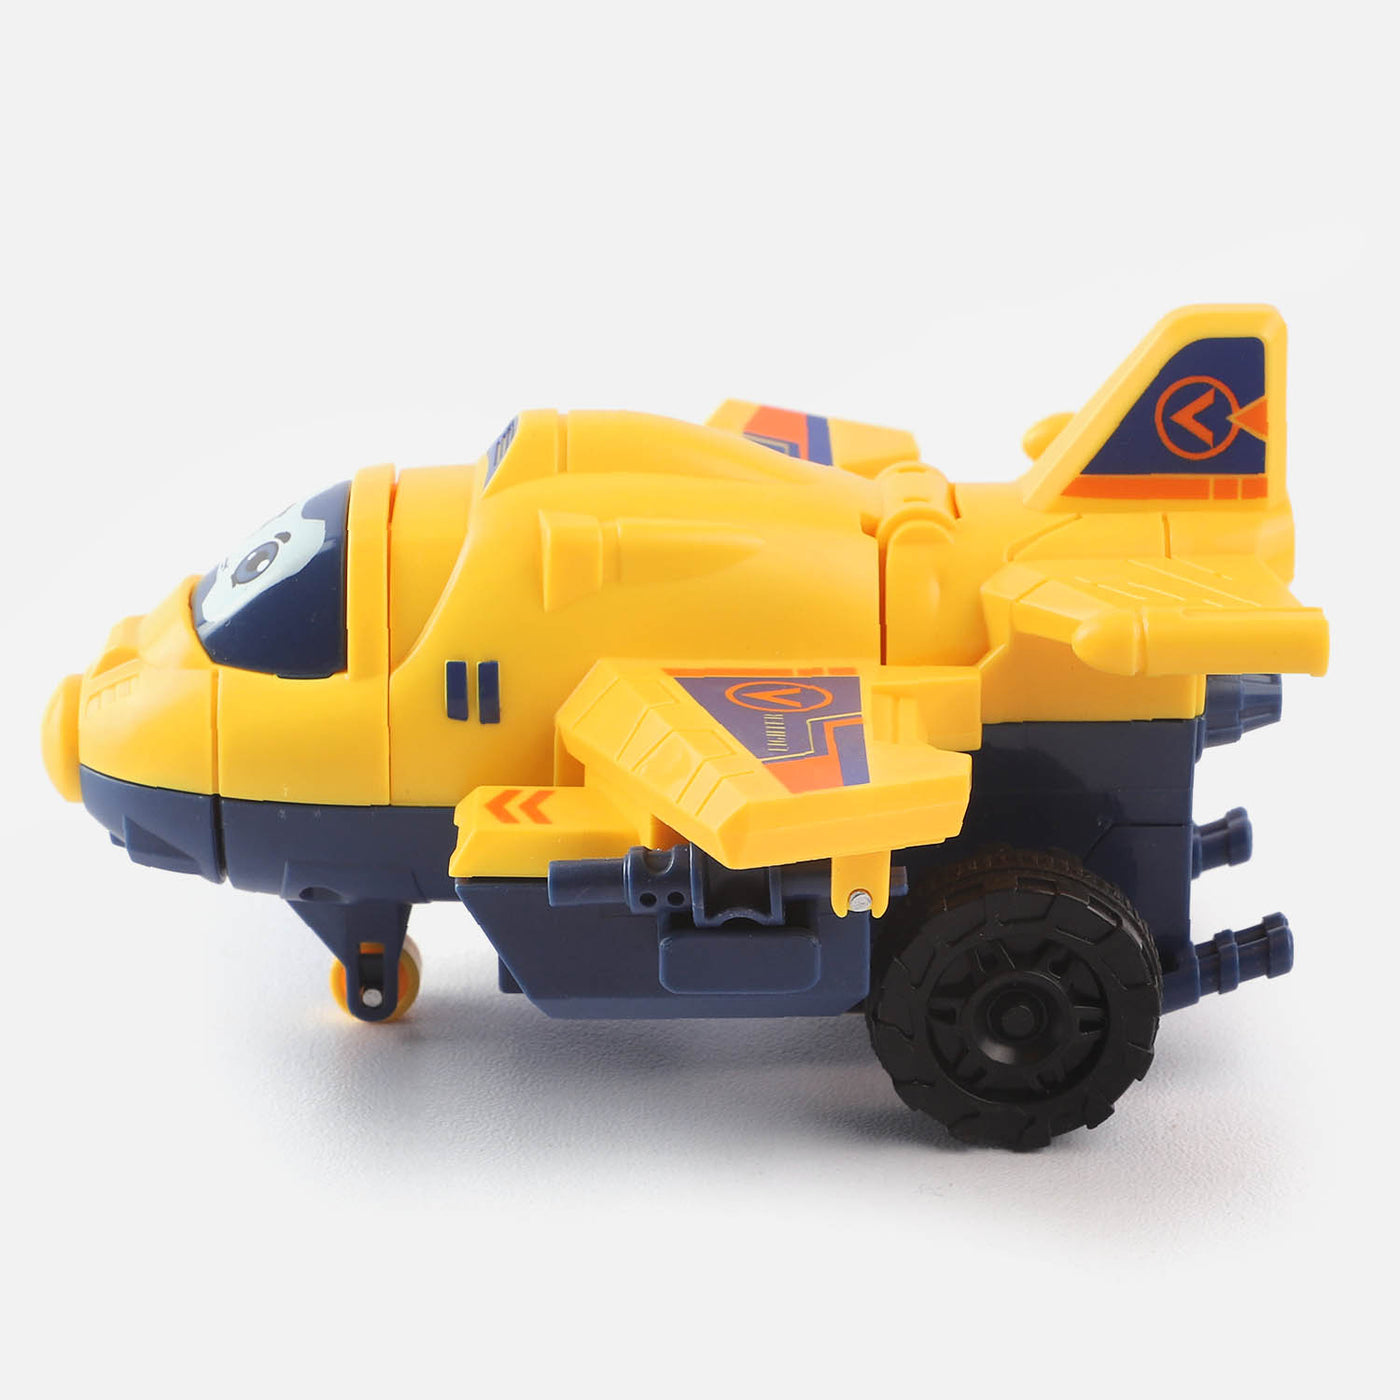 Friction Transform Plane Smart Vehicle Toy